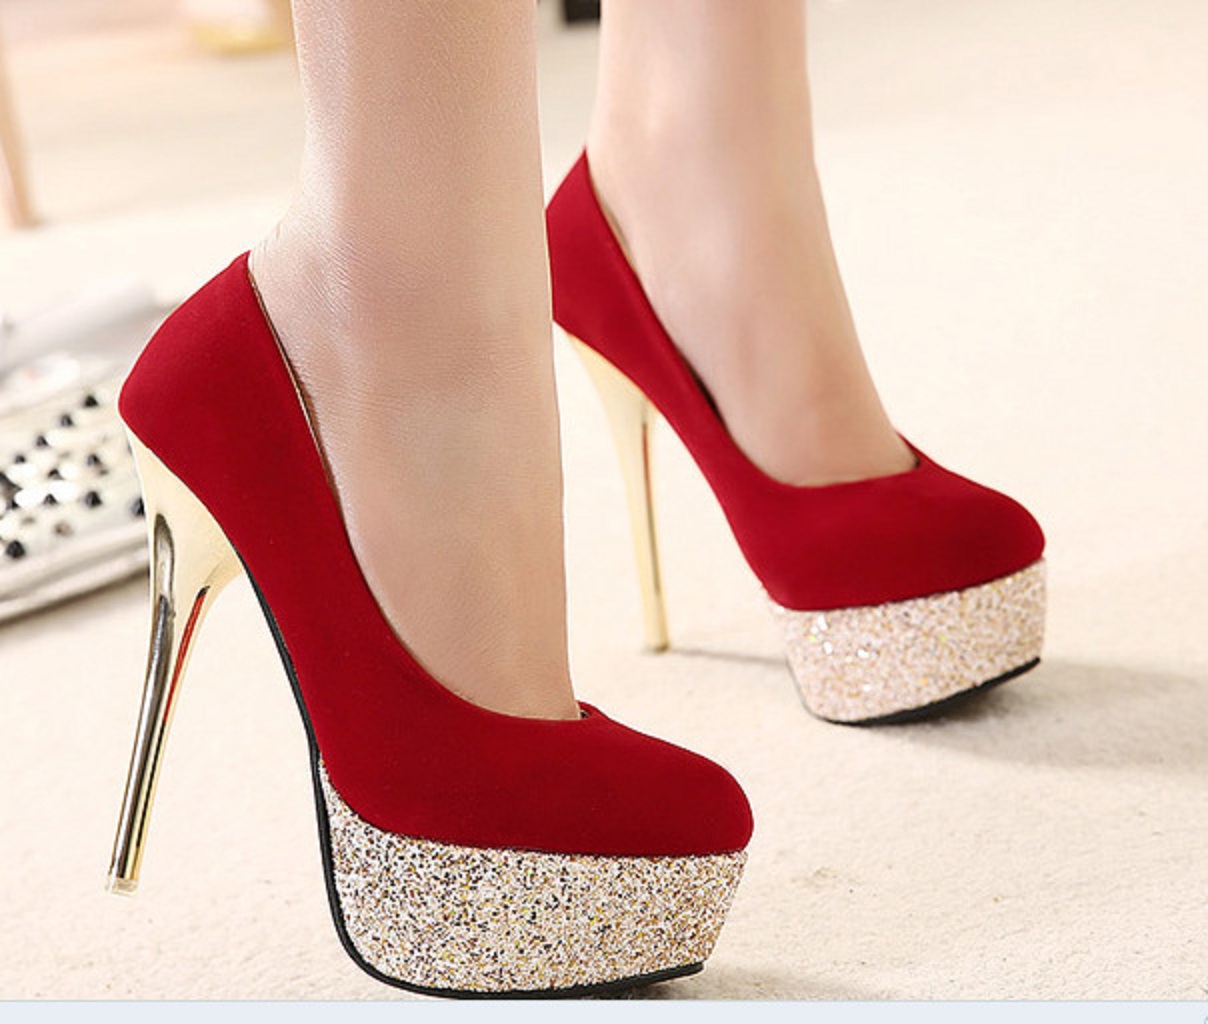 2015 Fashion Woman Pumps Sexy High Heels Platform Shoes - Shoes For Girls  High Heels - 1208x1024 Wallpaper 